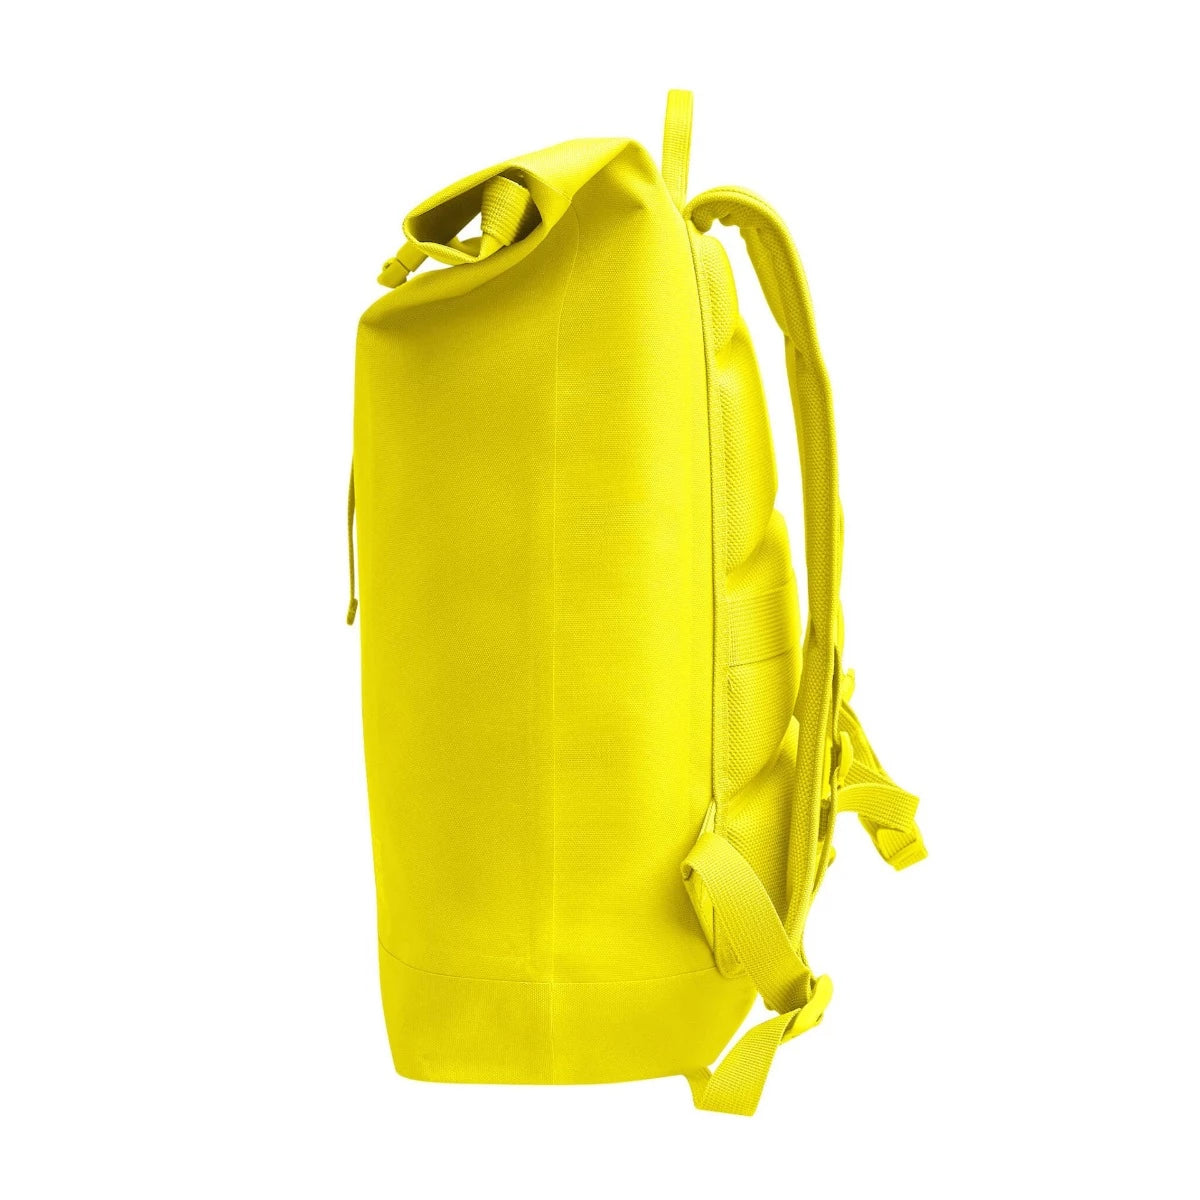 Rucksack RollTop lite yellow tang, Got Bag